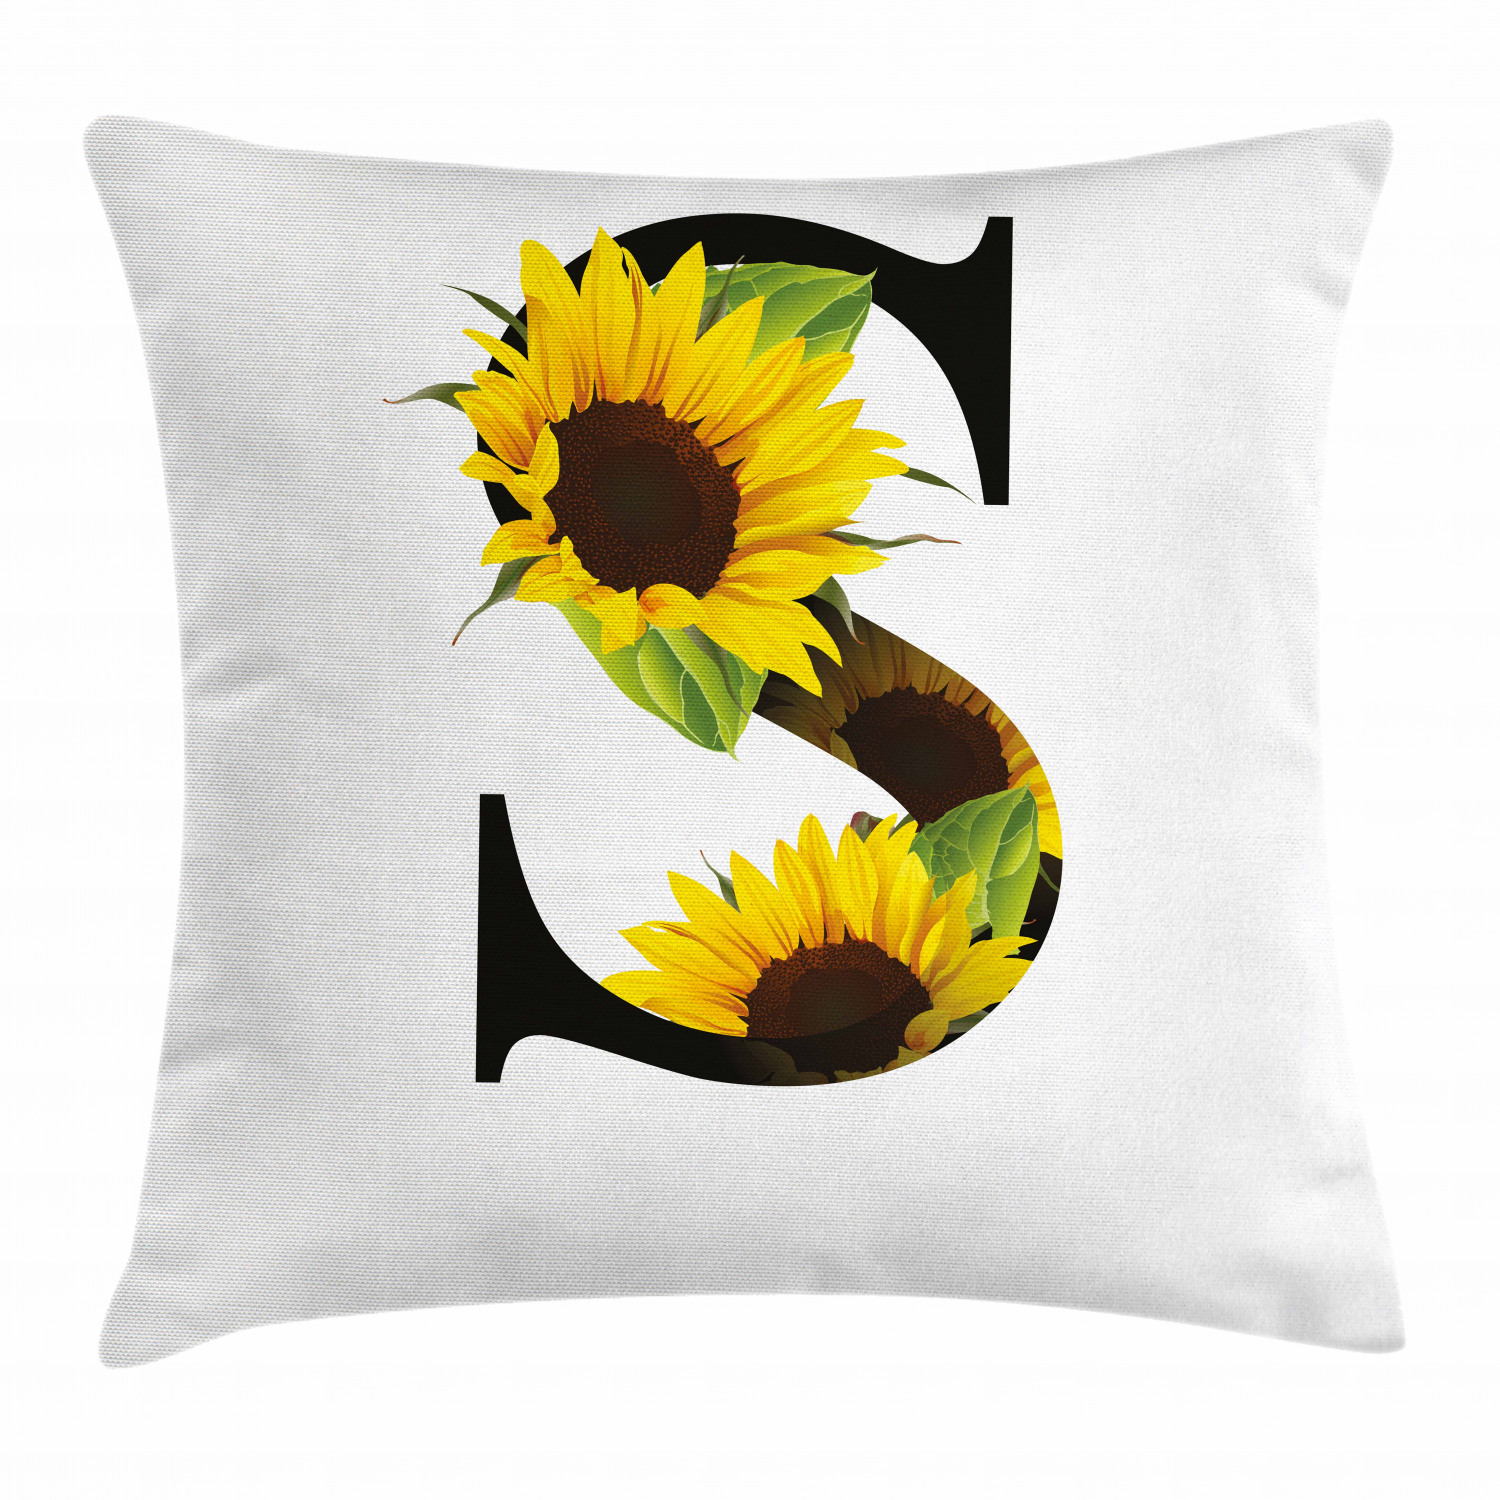 es designs Unique Whimsical Sunflower Art Throw Pillow Multicolor 18x18 